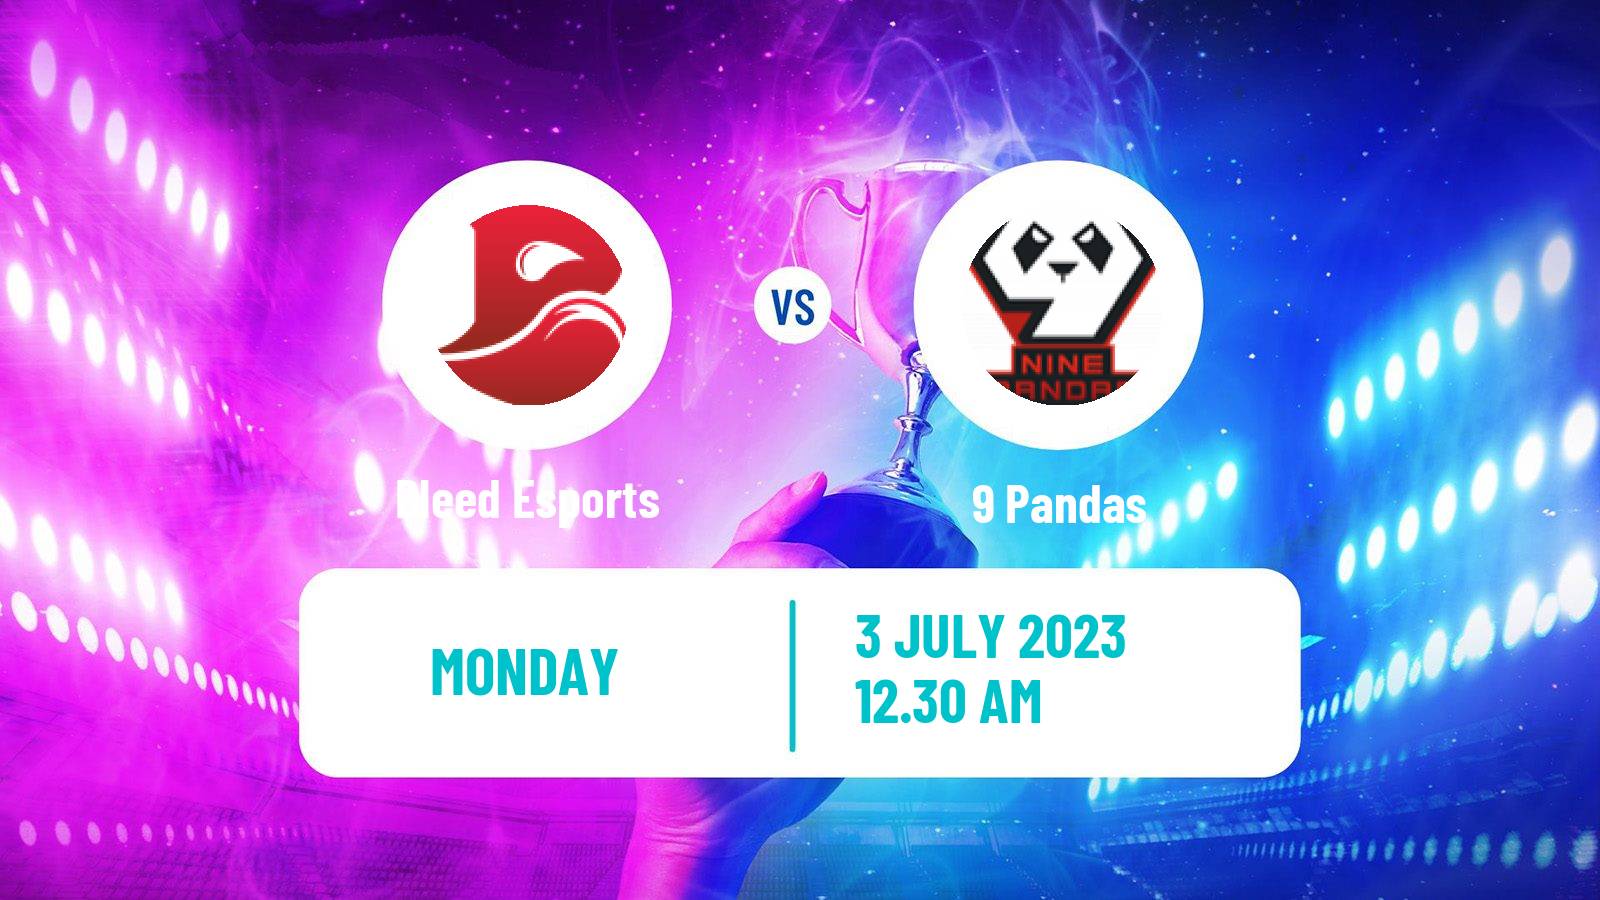 Esports Dota 2 Bali Major Bleed Esports - 9 Pandas